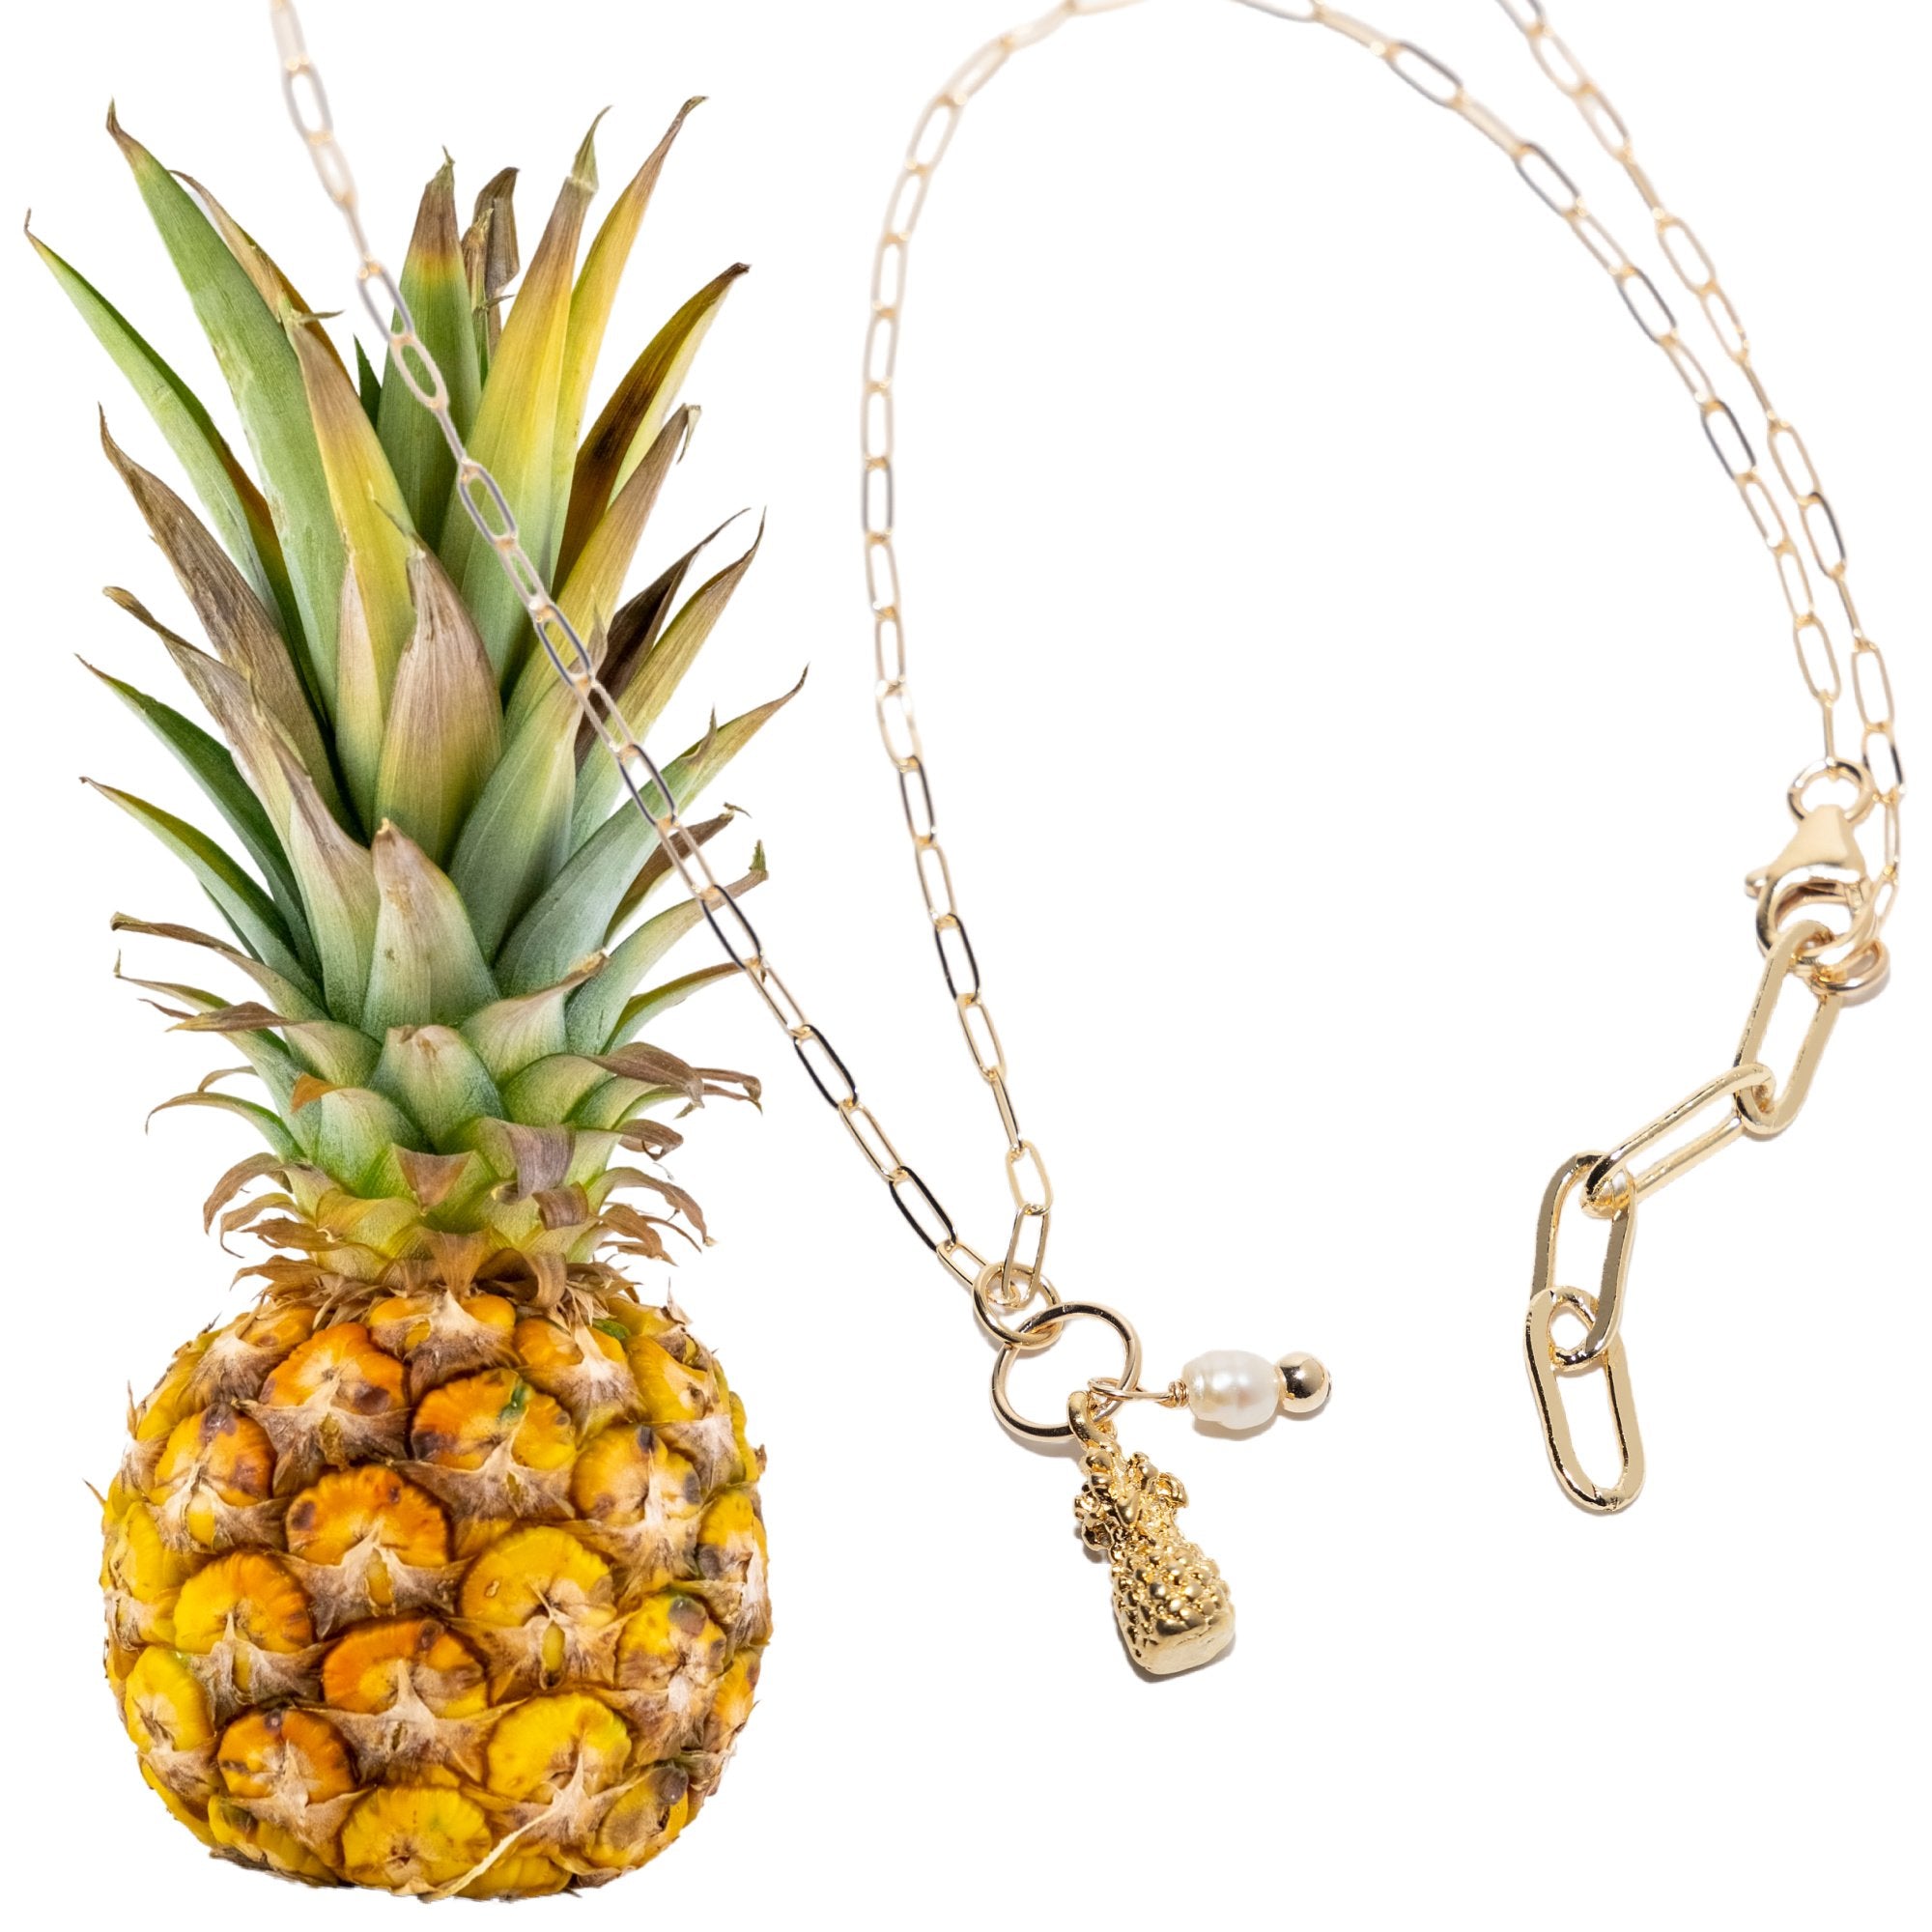 Pop-Up Mākeke - 21 Degrees North Designs - Kalahiki Lei Choker Necklace with Pineapple